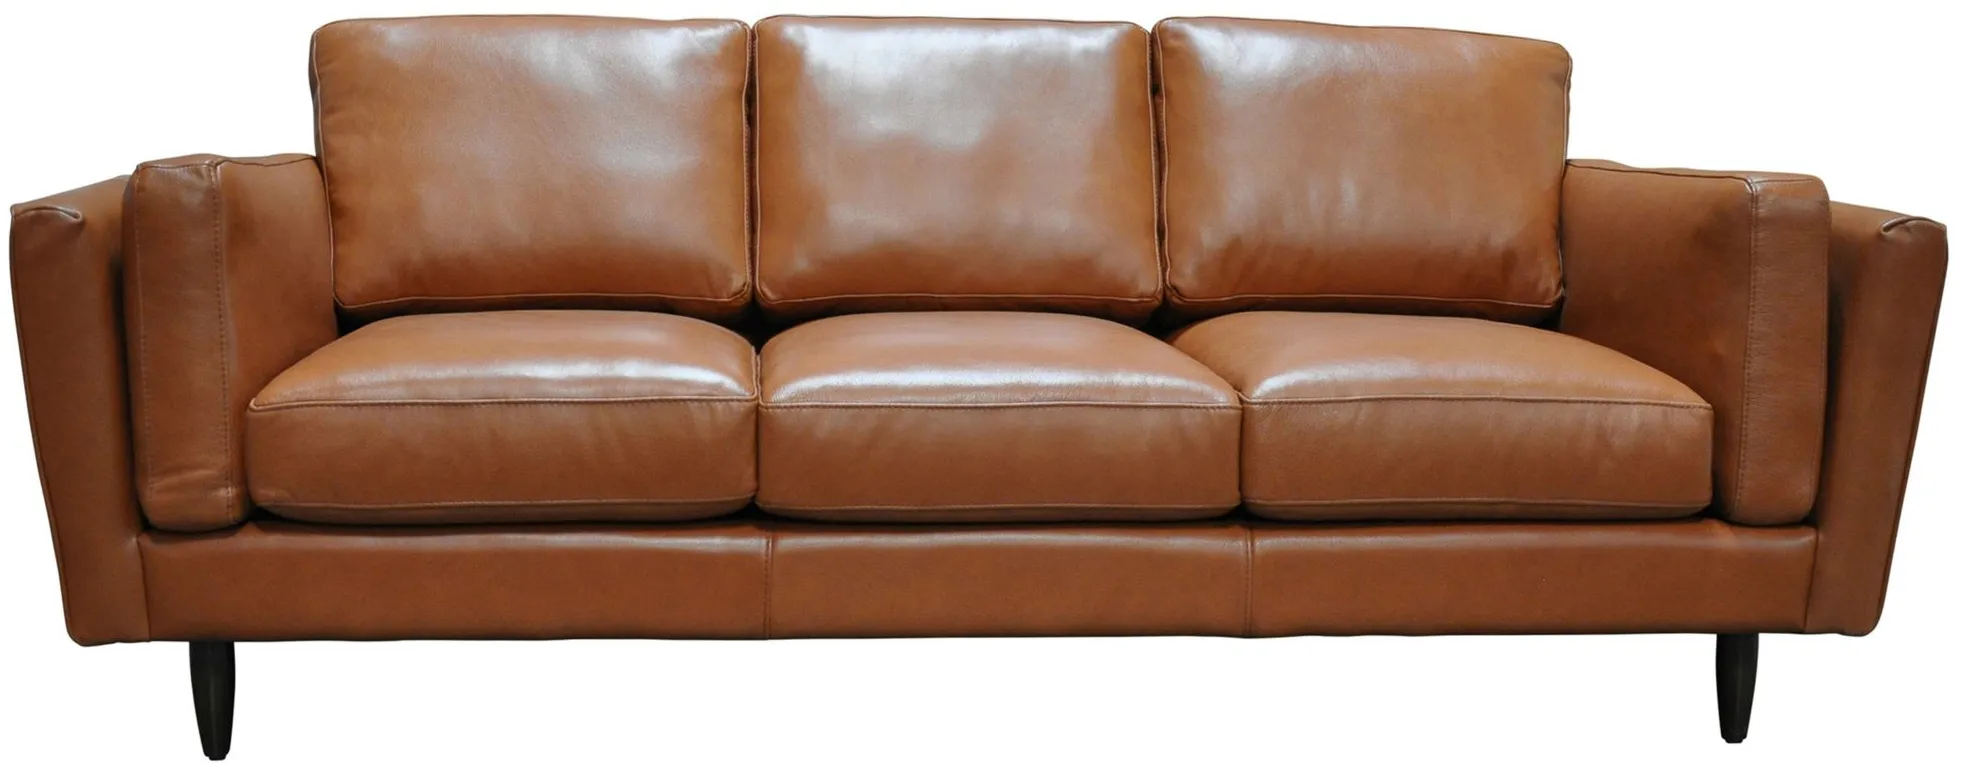 Zander Sofa in Denver Caramel by Omnia Leather